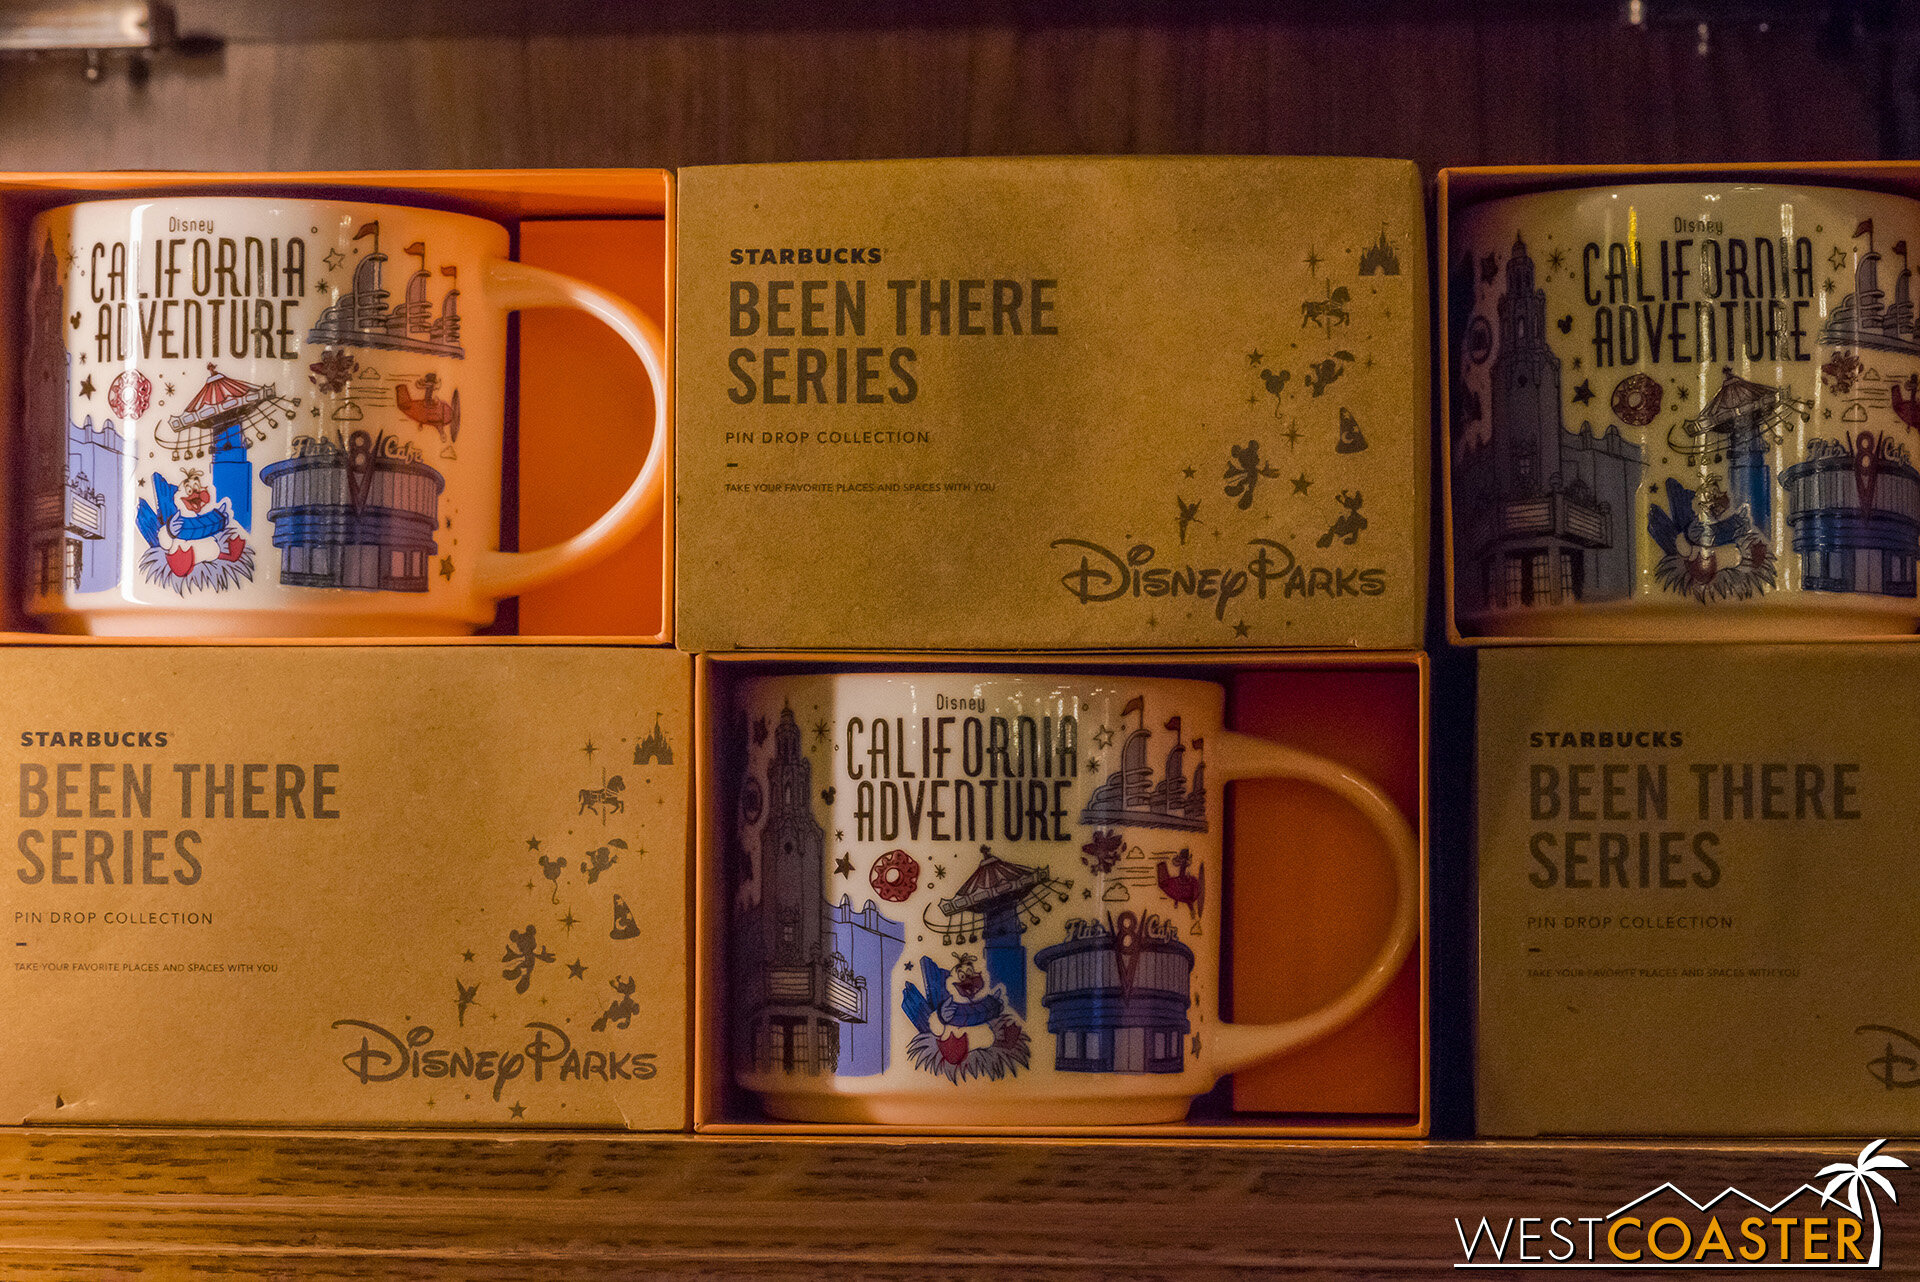  New Starbucks park mugs have been released. 